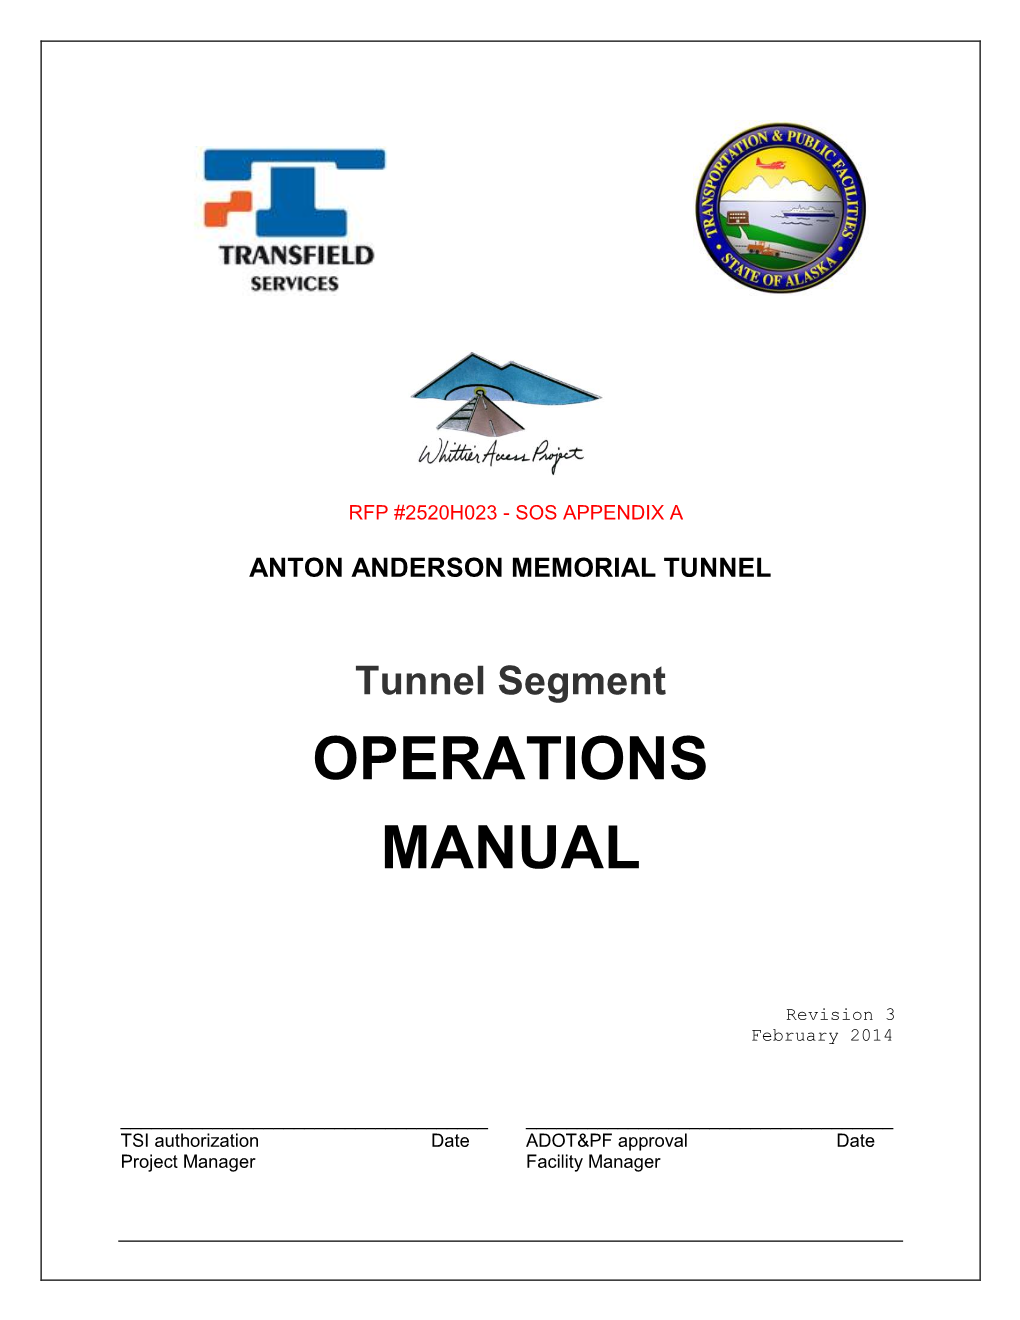 Anton Anderson Memorial Tunnel Emergency Response Plan